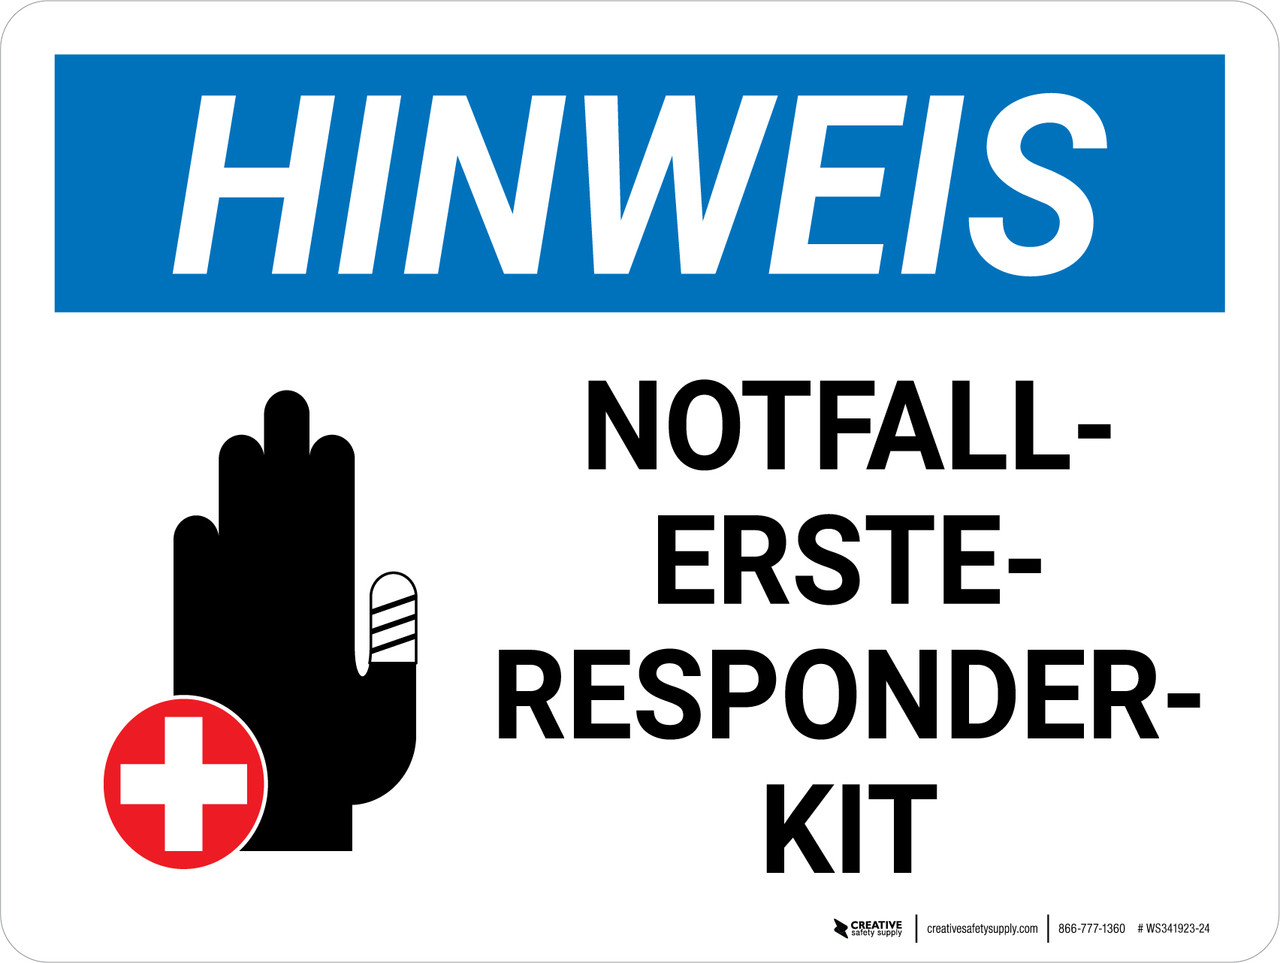 ERSTE-HILFE-KASTEN (First Aid Kit) German - Wall Sign